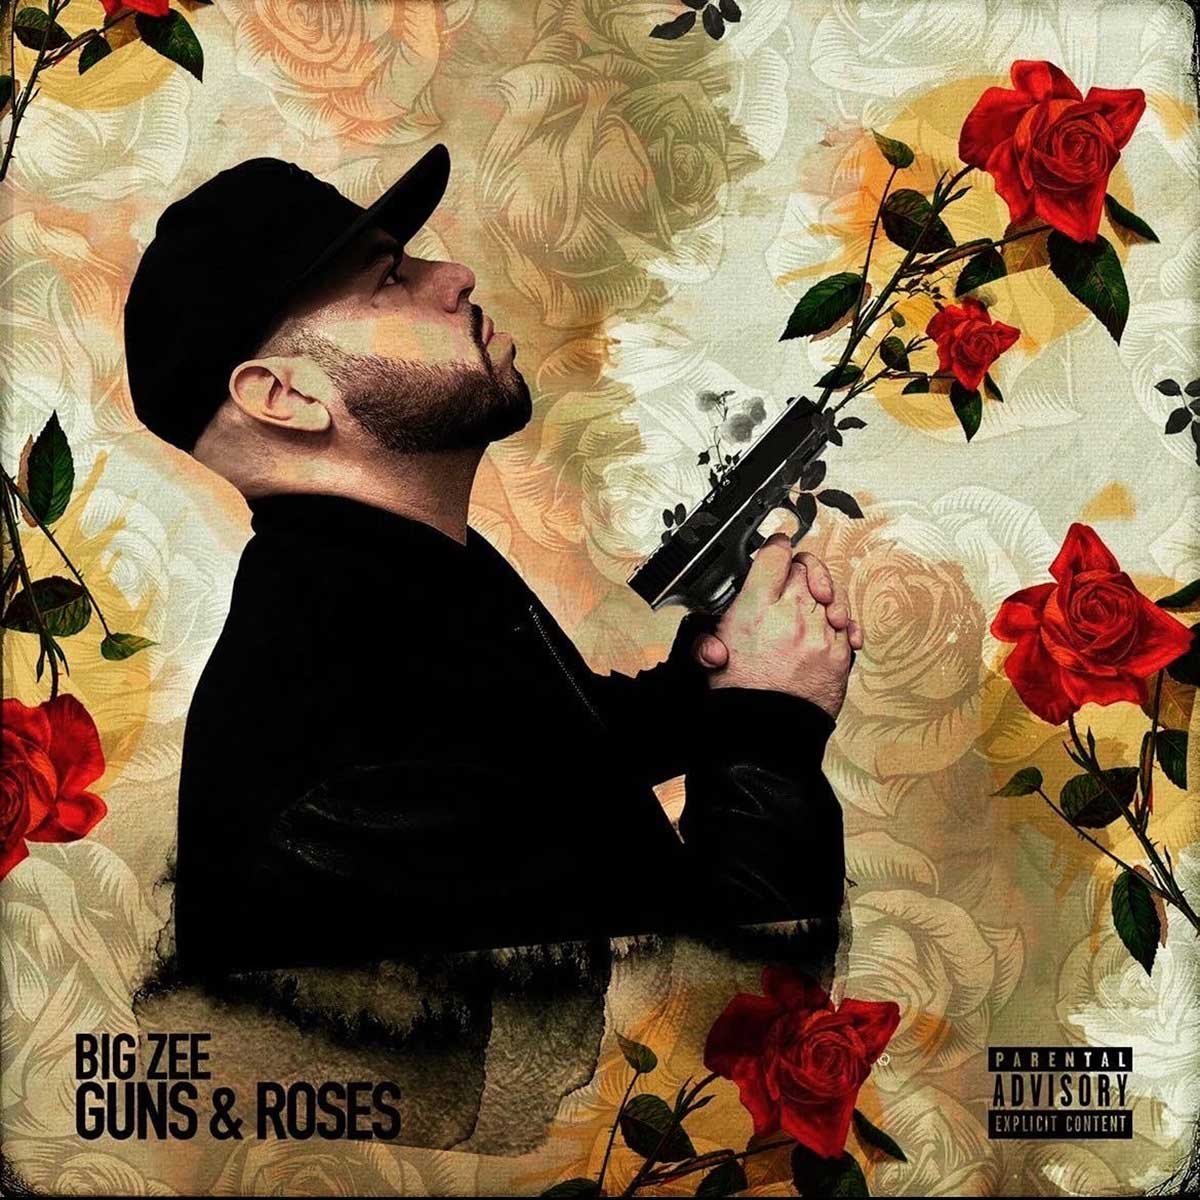 Guns & Roses: Big Zee drops new album ahead of Ottawa Bluesfest performance